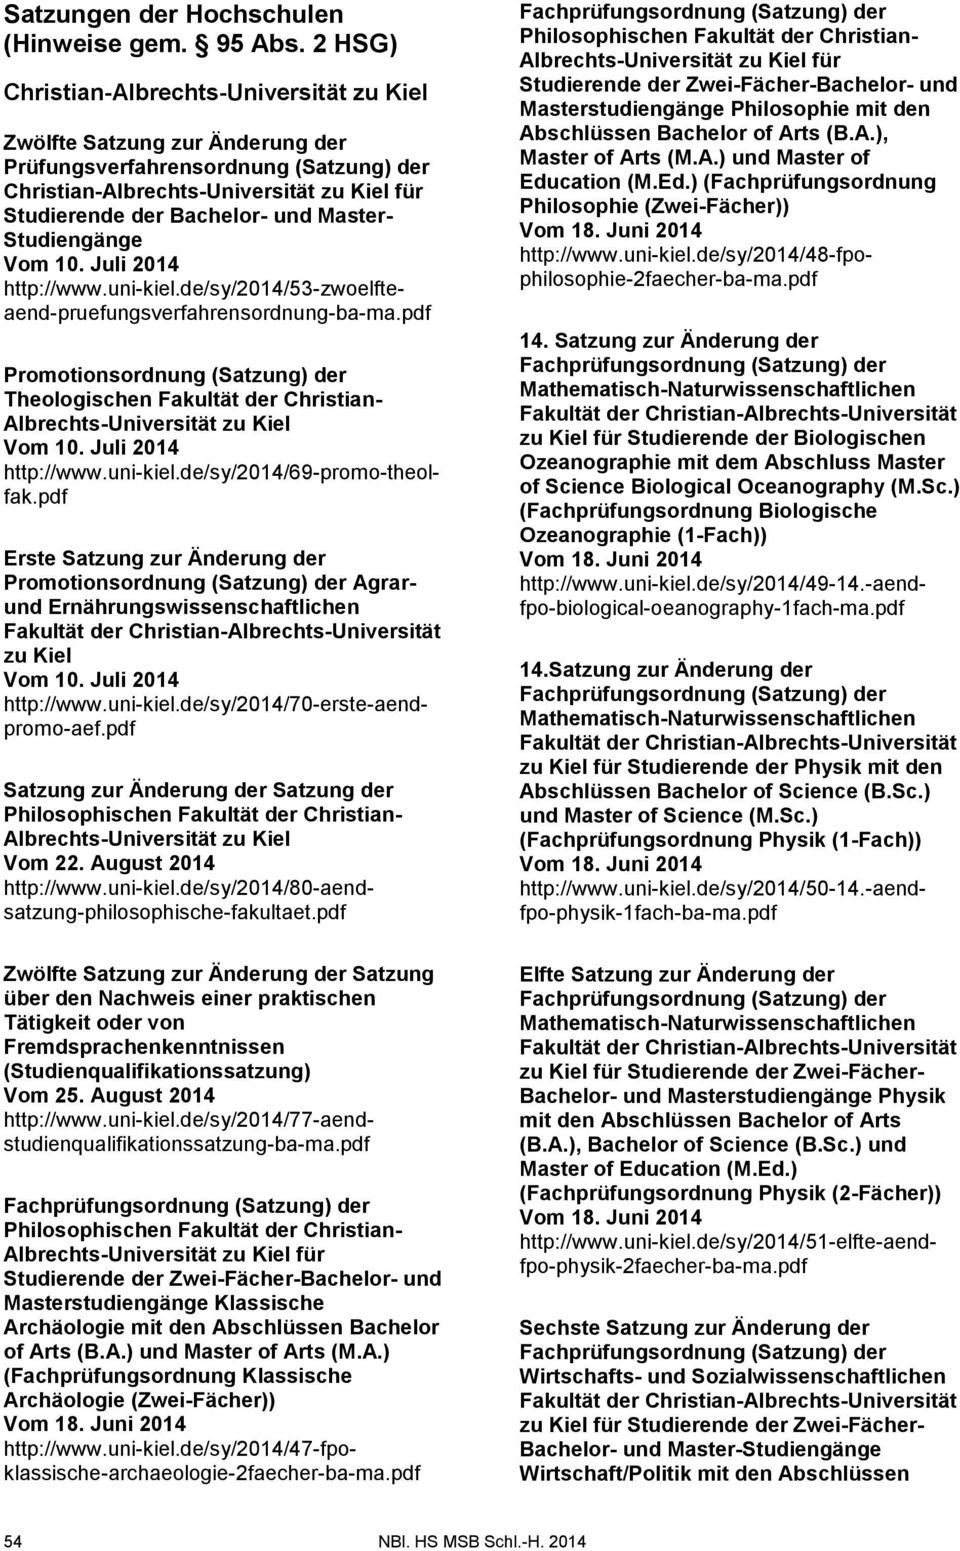 http://www.uni-kiel.de/sy/2014/53-zwoelfteaend-pruefungsverfahrensordnung-ba-ma.pdf Promotionsordnung (Satzung) der Theologischen Fakultät der Christian- Albrechts-Universität zu Kiel http://www.